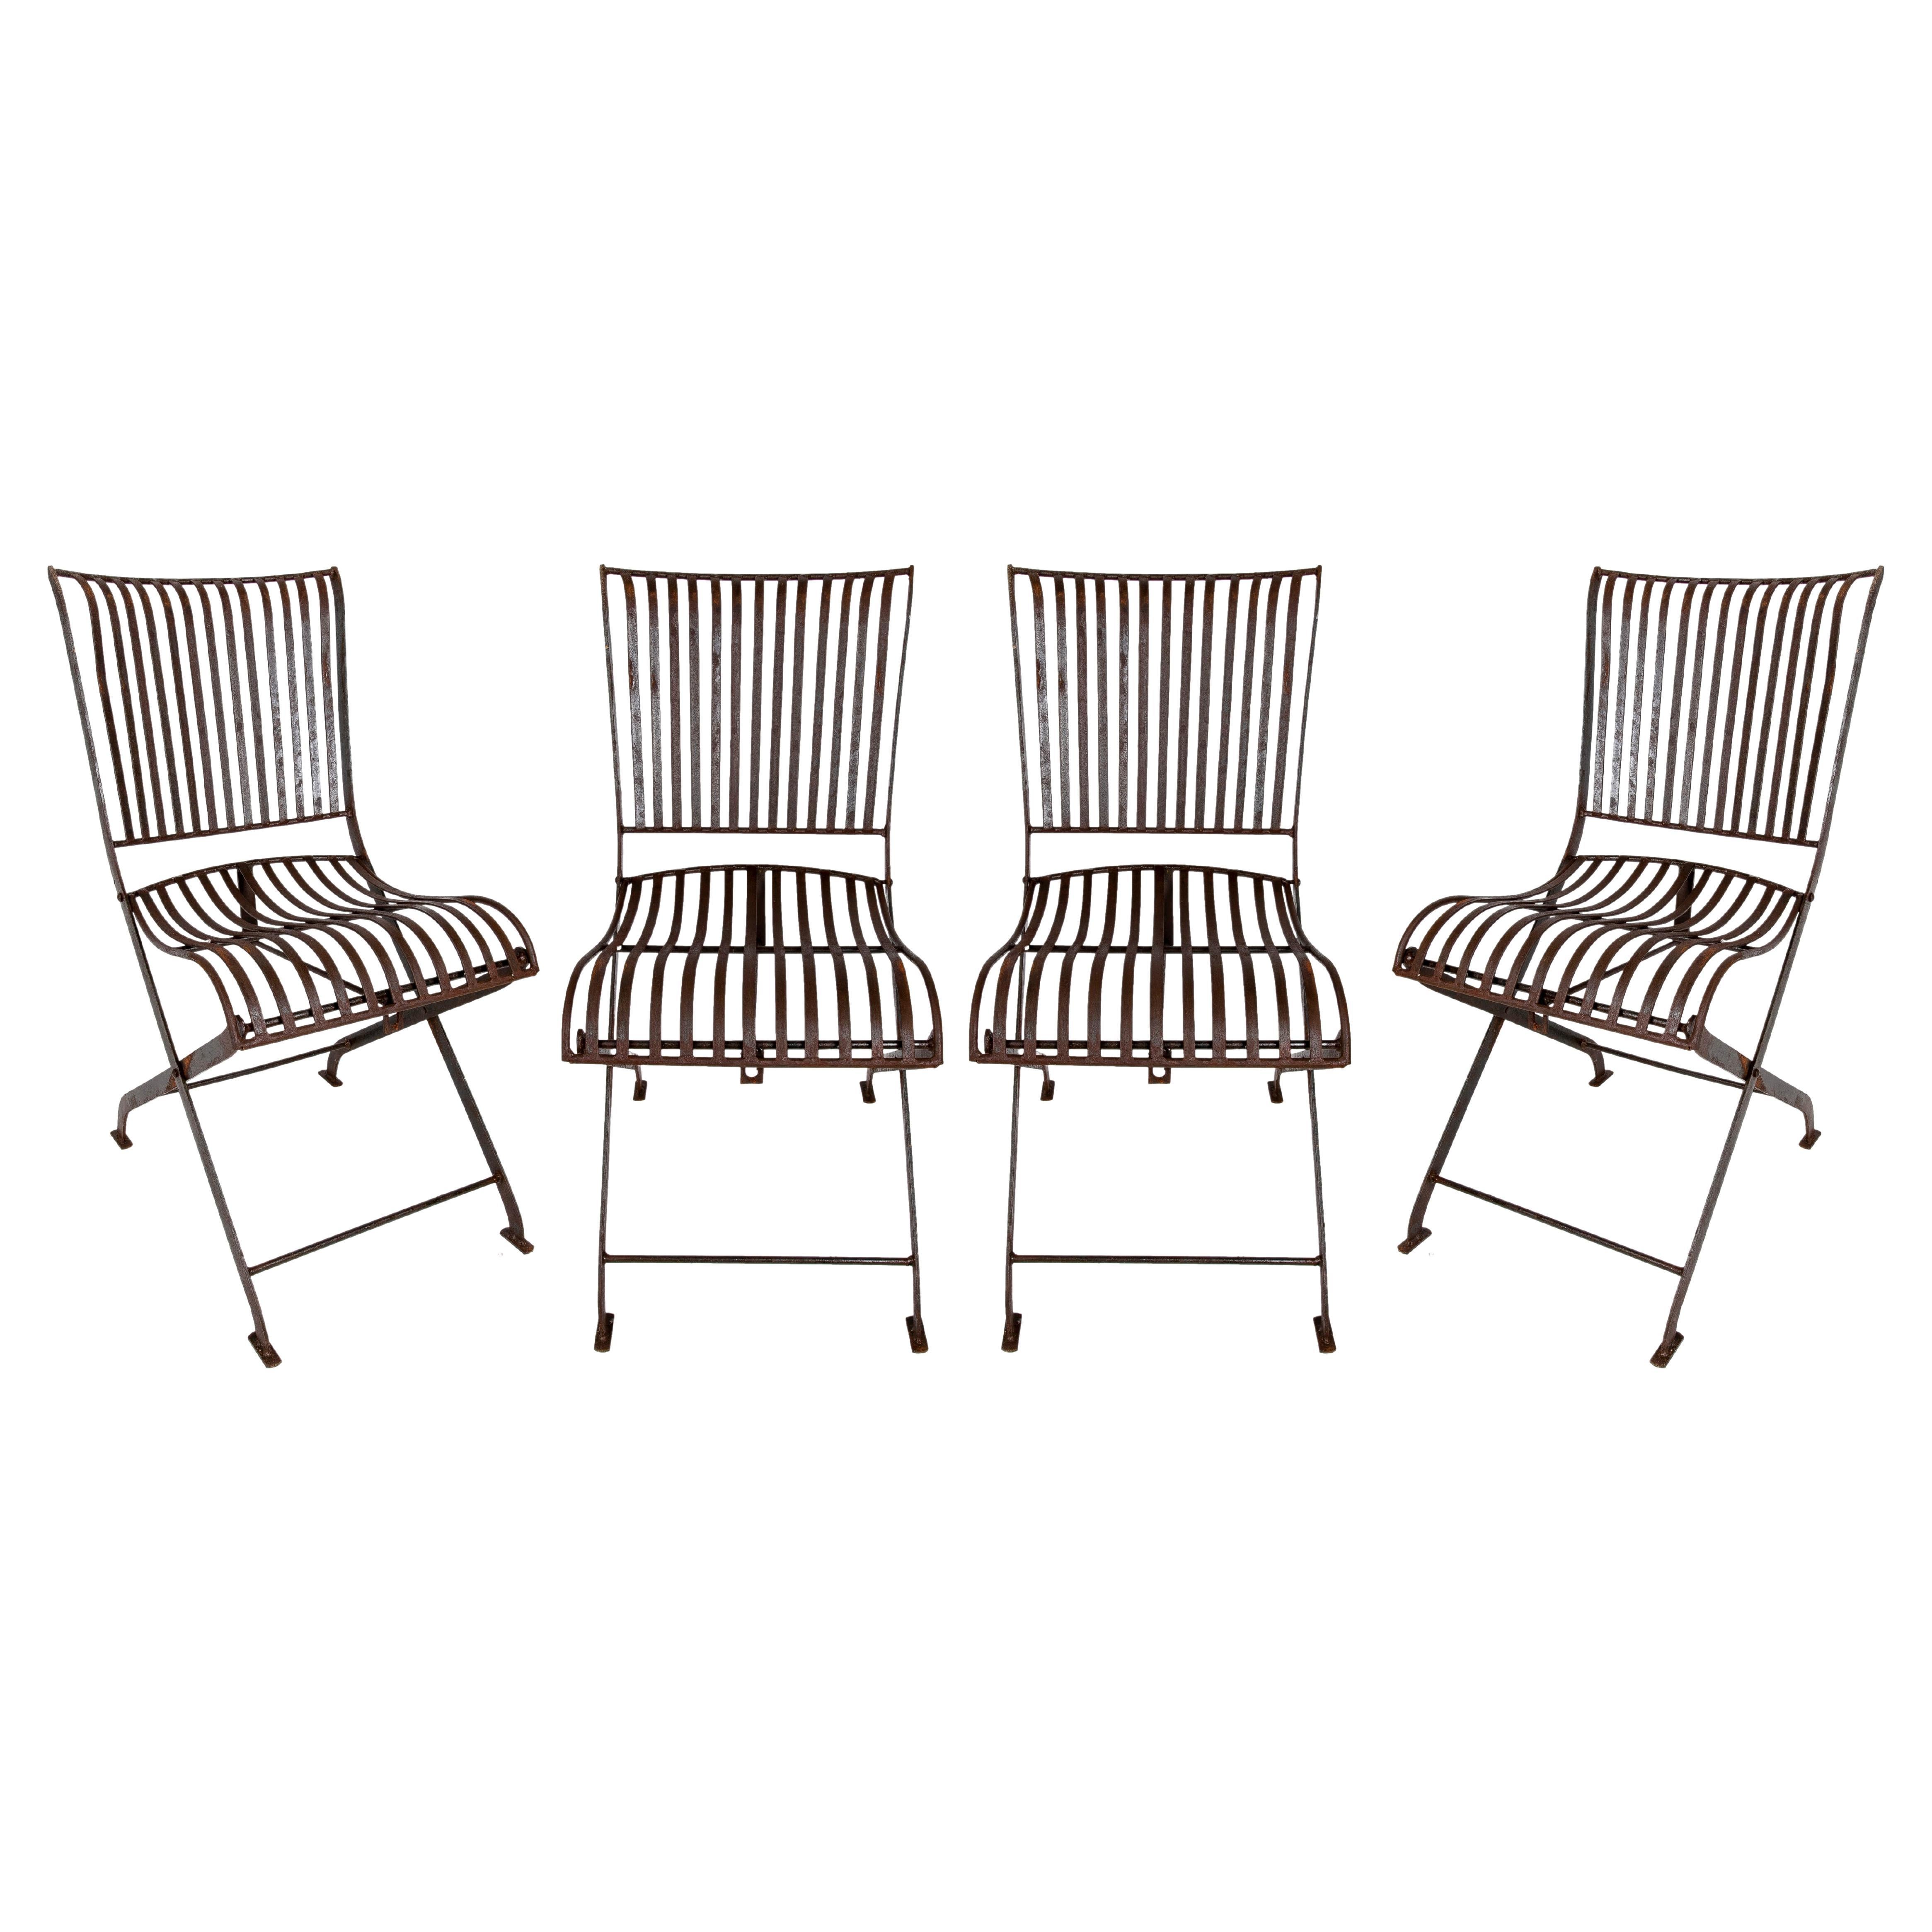 Set of Four Foldable Iron Garden Chairs